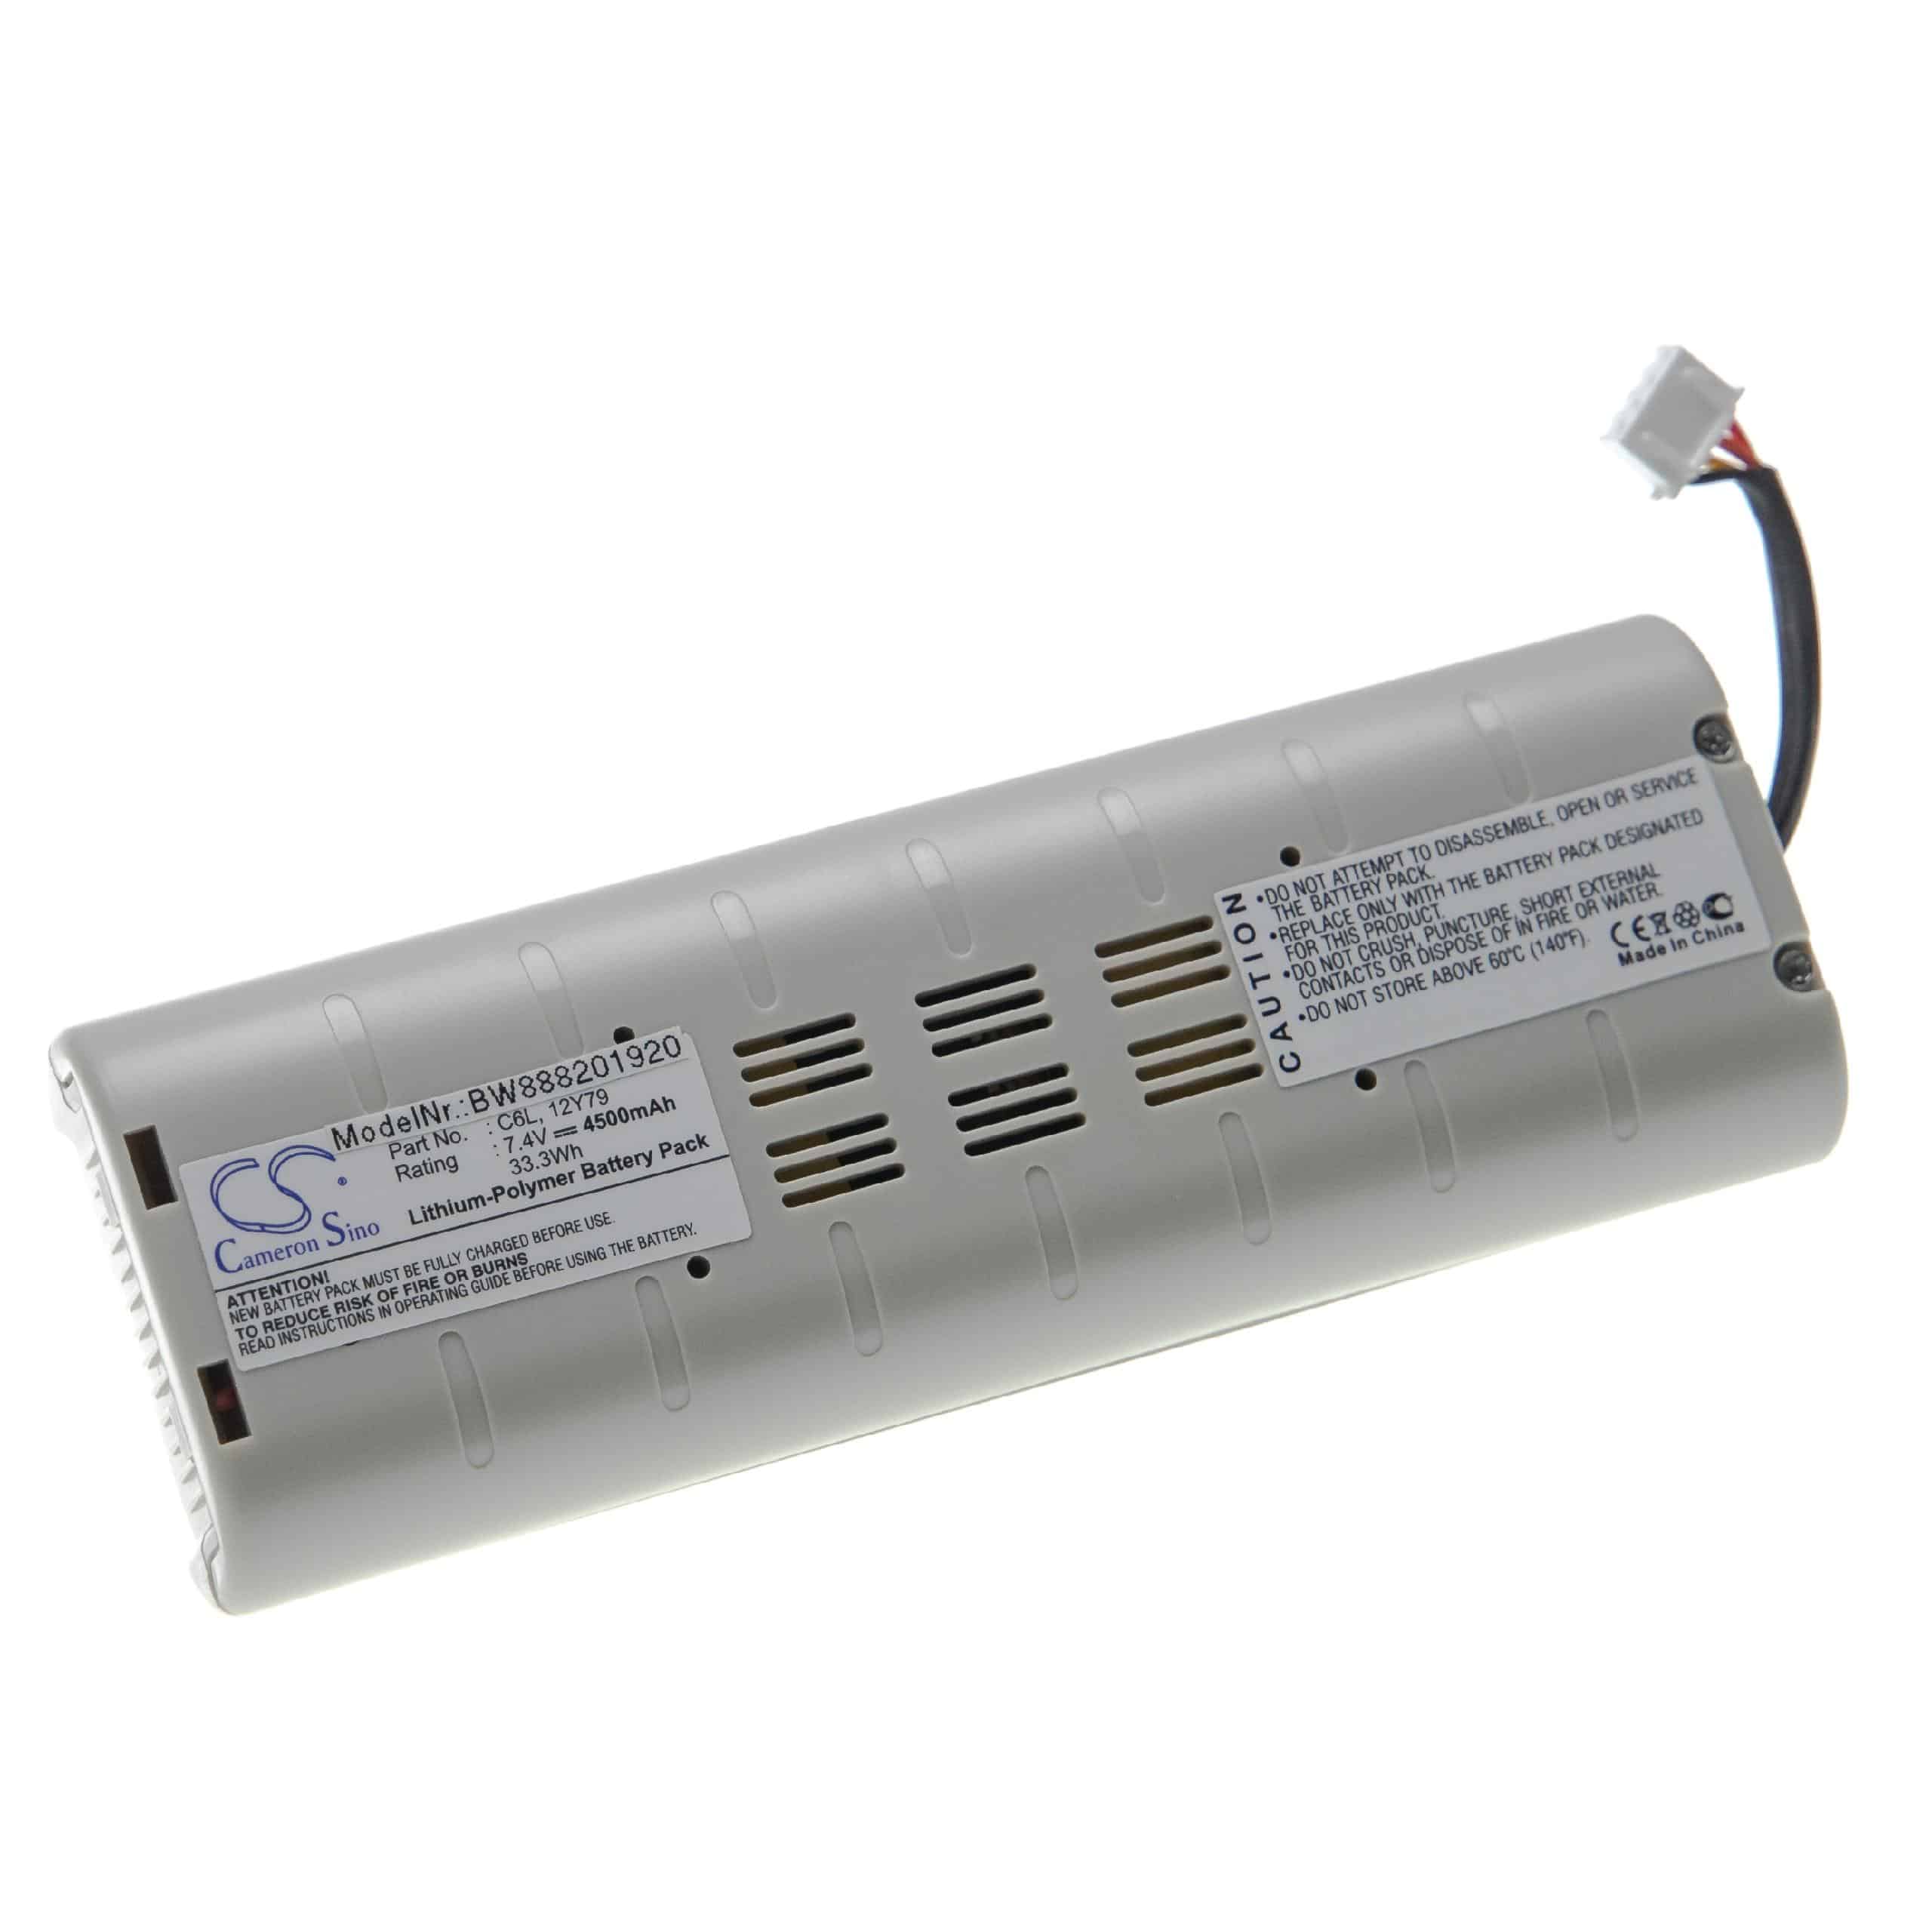 Akumulator do radia zamiennik Pure C6L, 12V79, VL-60923 - 4500 mAh 7,4 V LiPo